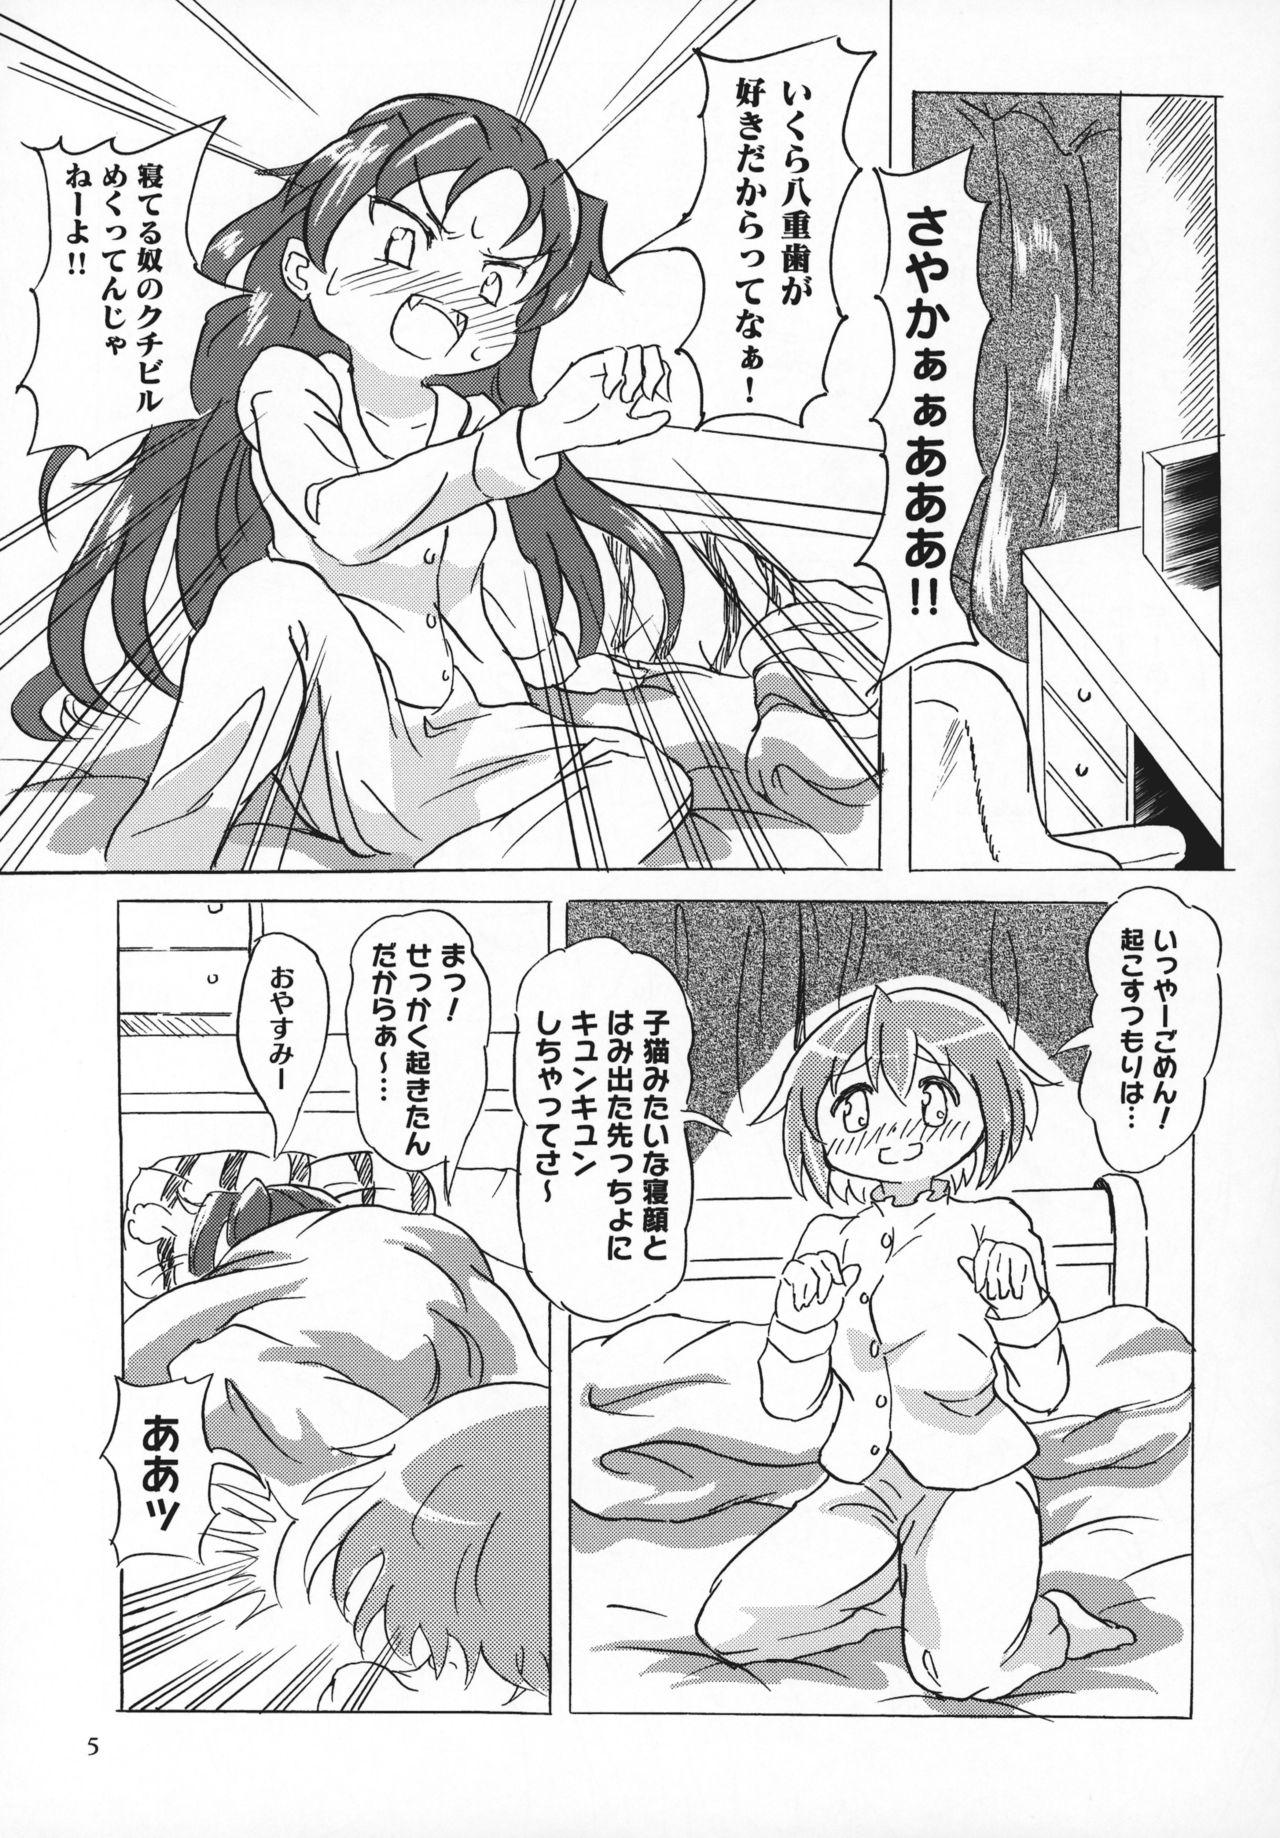 Master yaeba fetish sayaka-chan 2 - Puella magi madoka magica Gape - Page 4